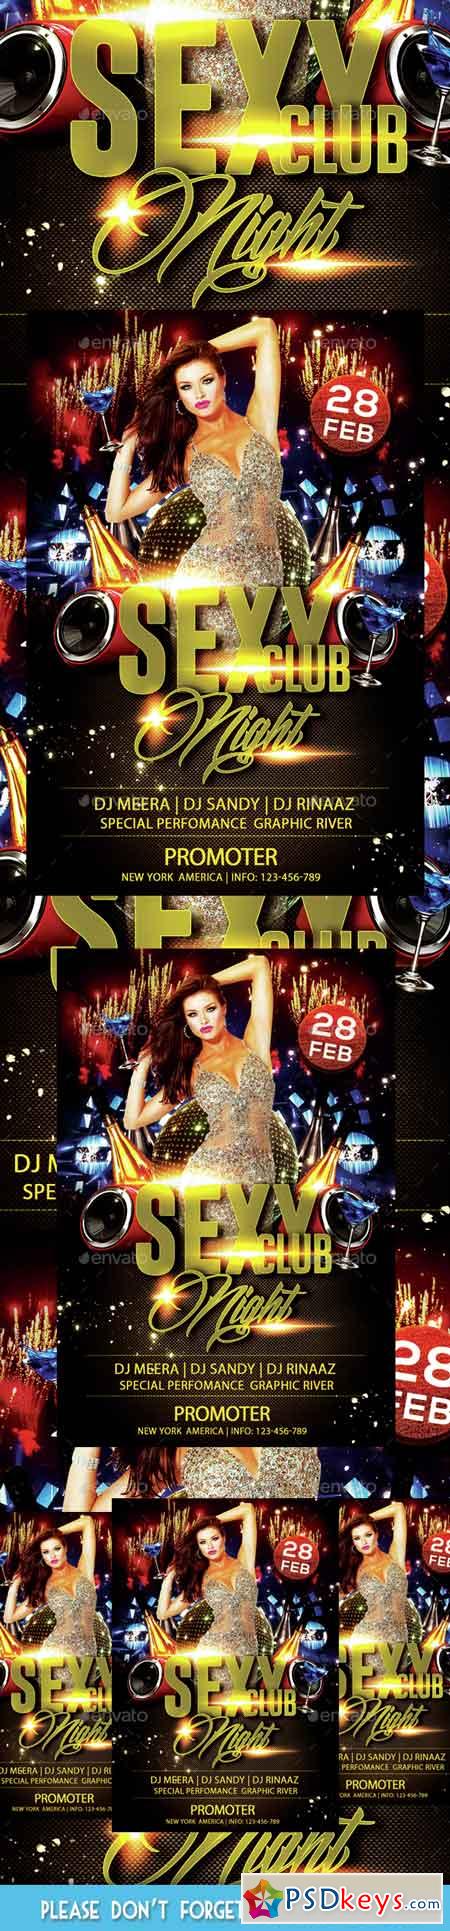 Sexy Club Night Party Flyer 14541207